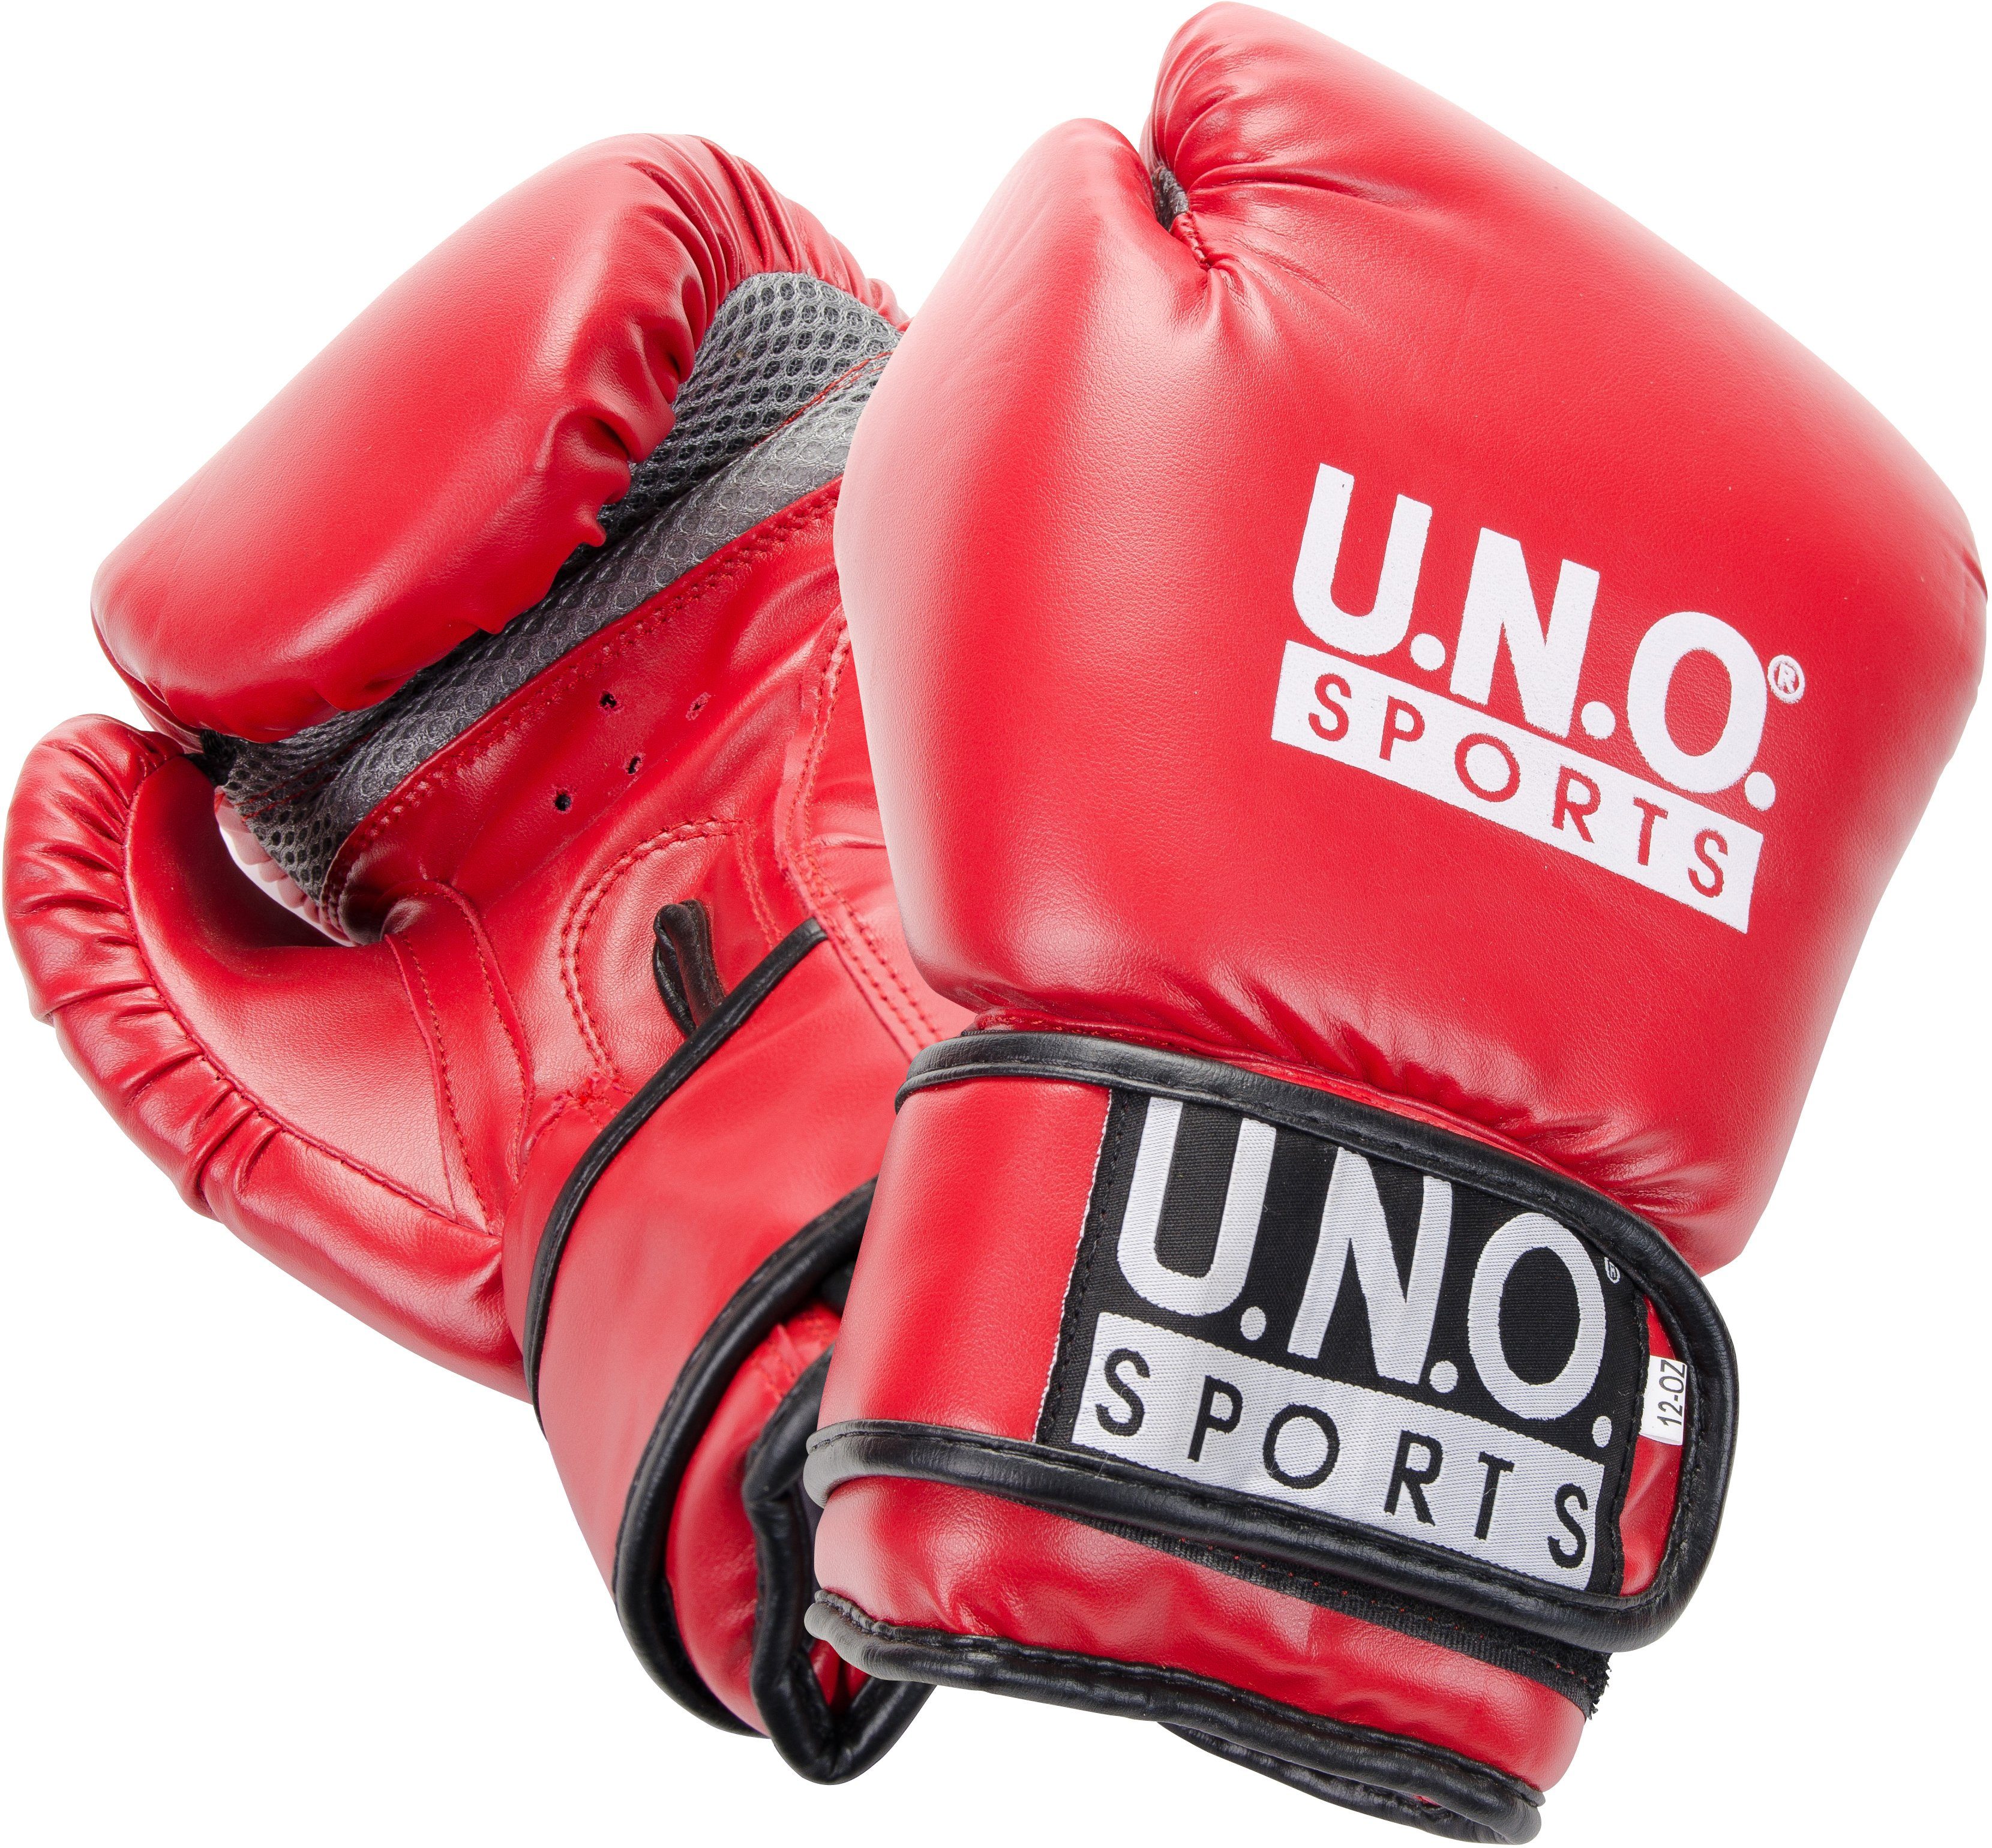 U.N.O. leichtes Boxhandschuhe Fun, Heimtraining für SPORTS